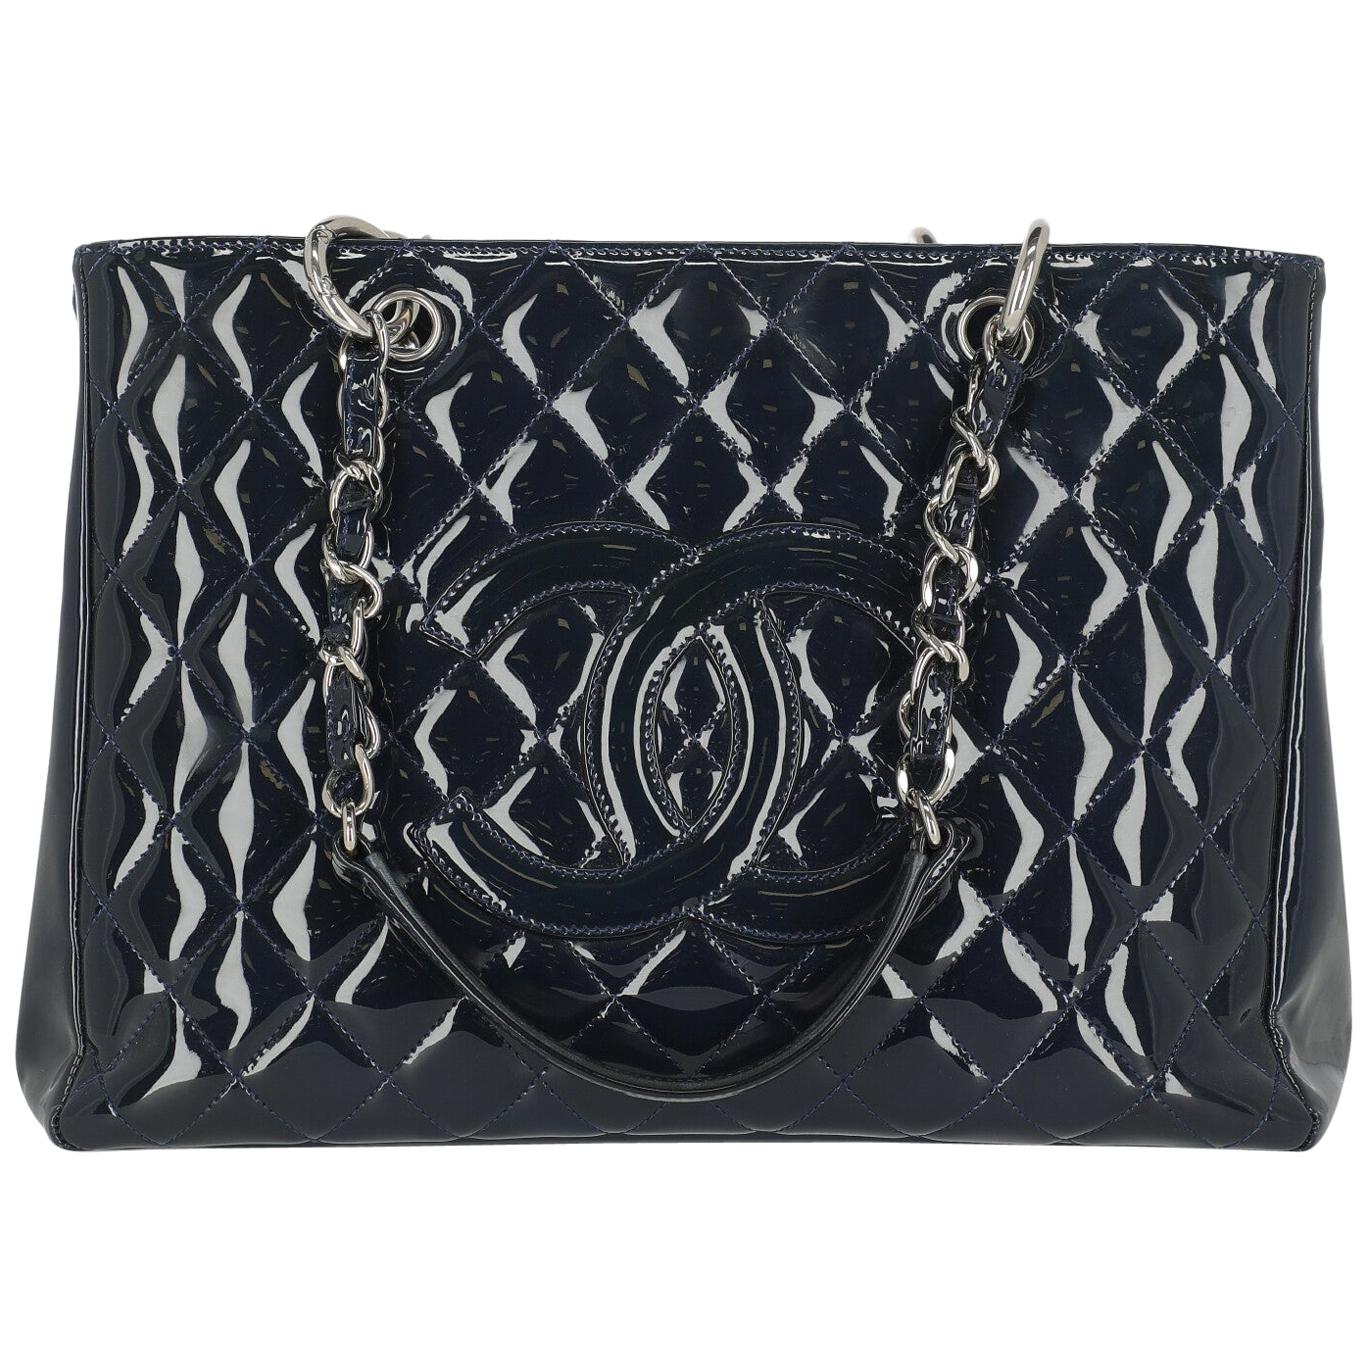 Chanel Women's Handbag Grand Shopping Tote Navy Leather